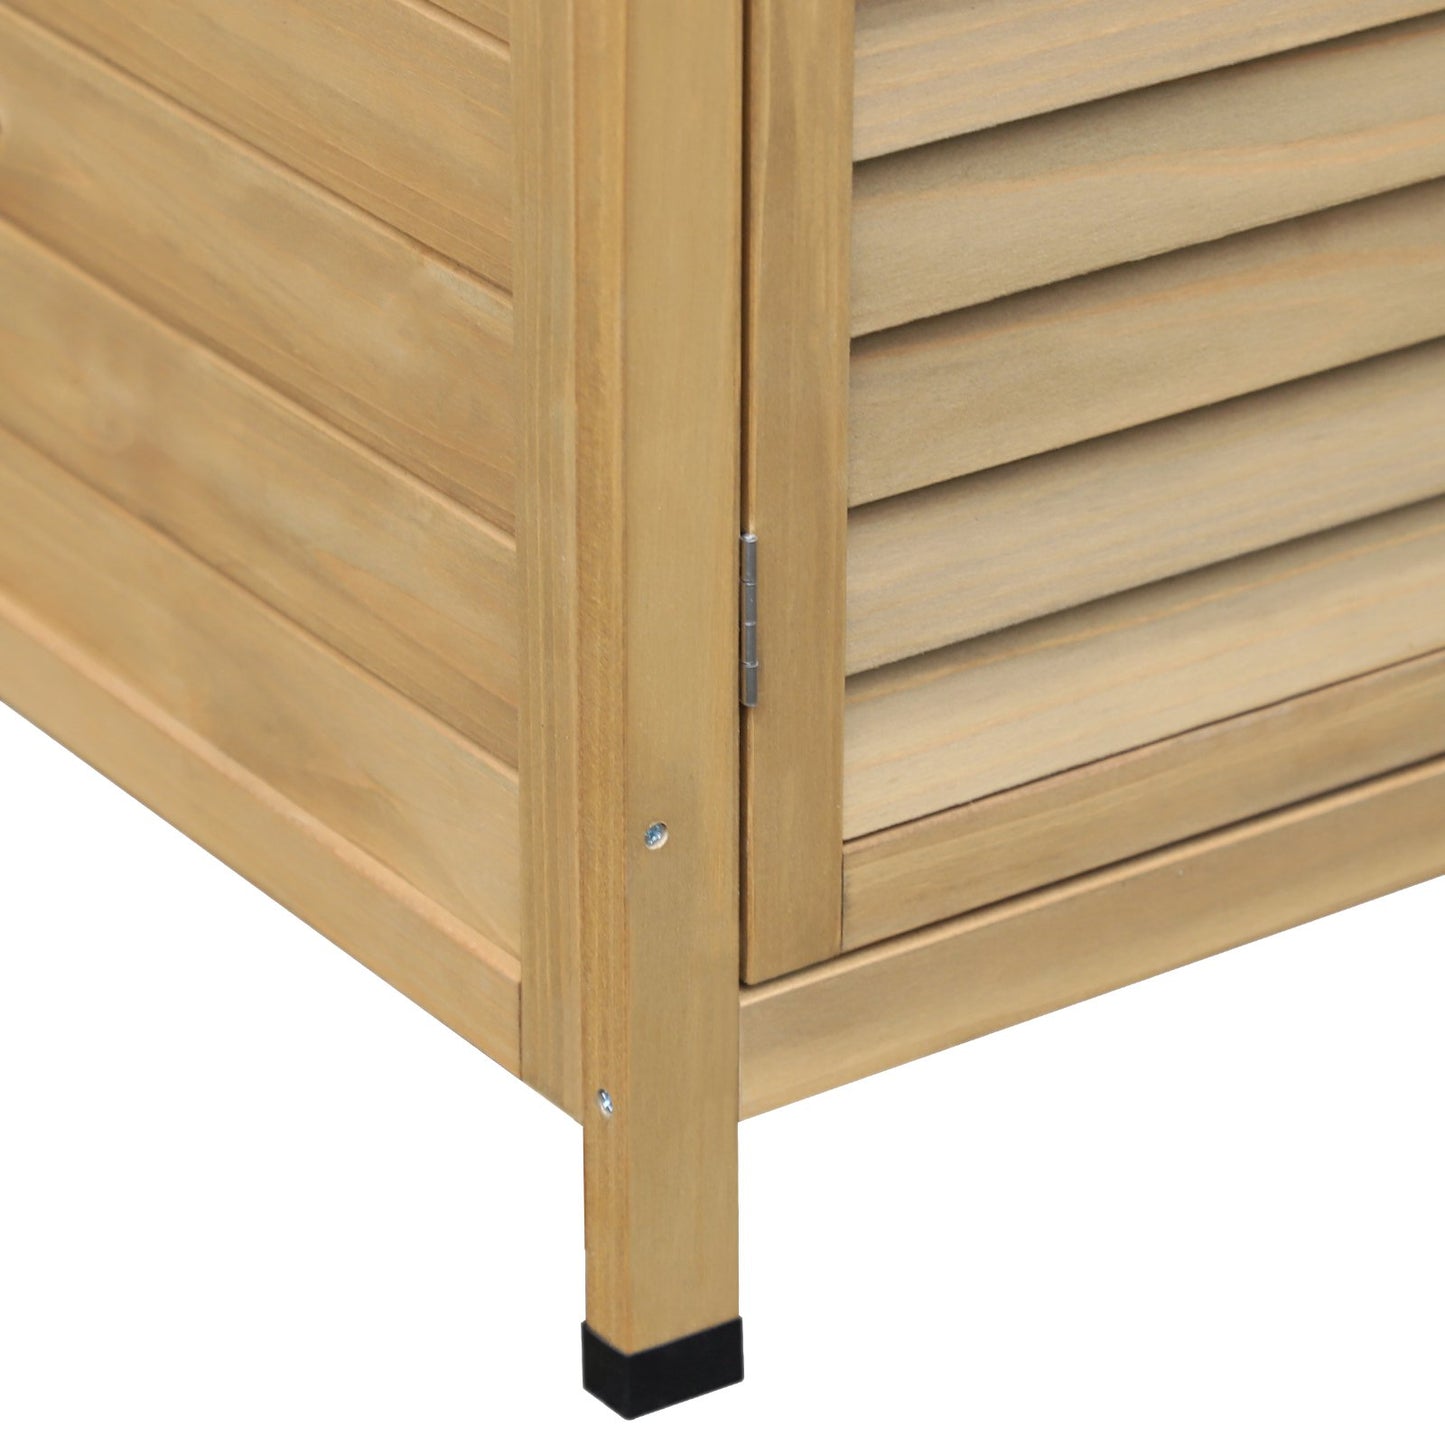 Outsunny 1.5 x 2.8ft Fir Wood Slatted Door Garden Storage Cabinet